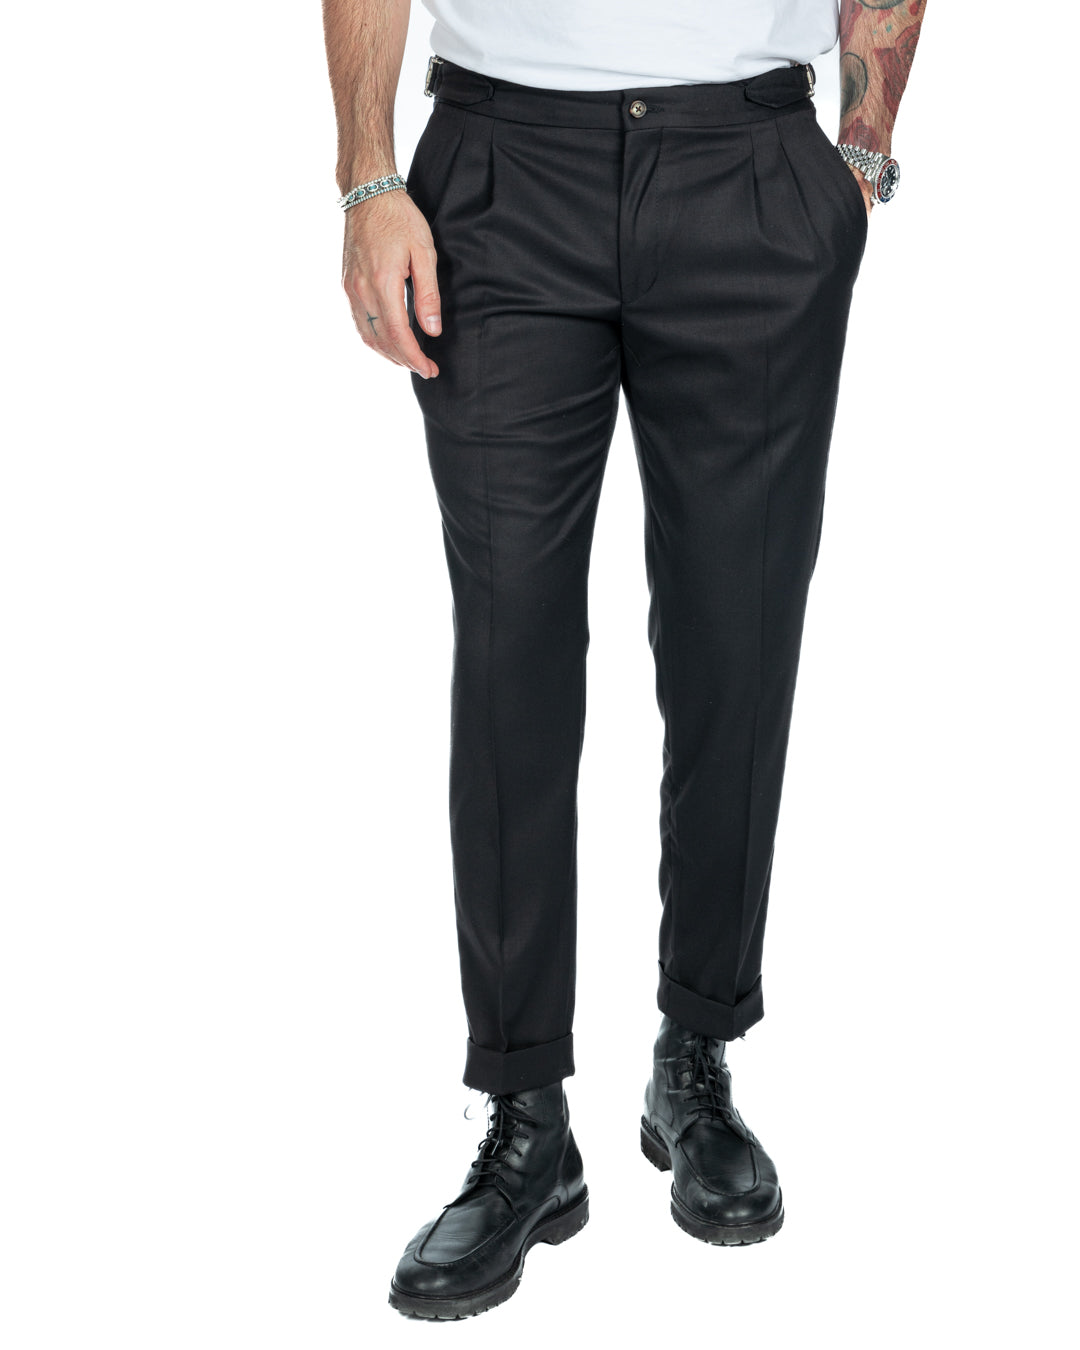 Otranto - pantalon noir avec boucles et plis